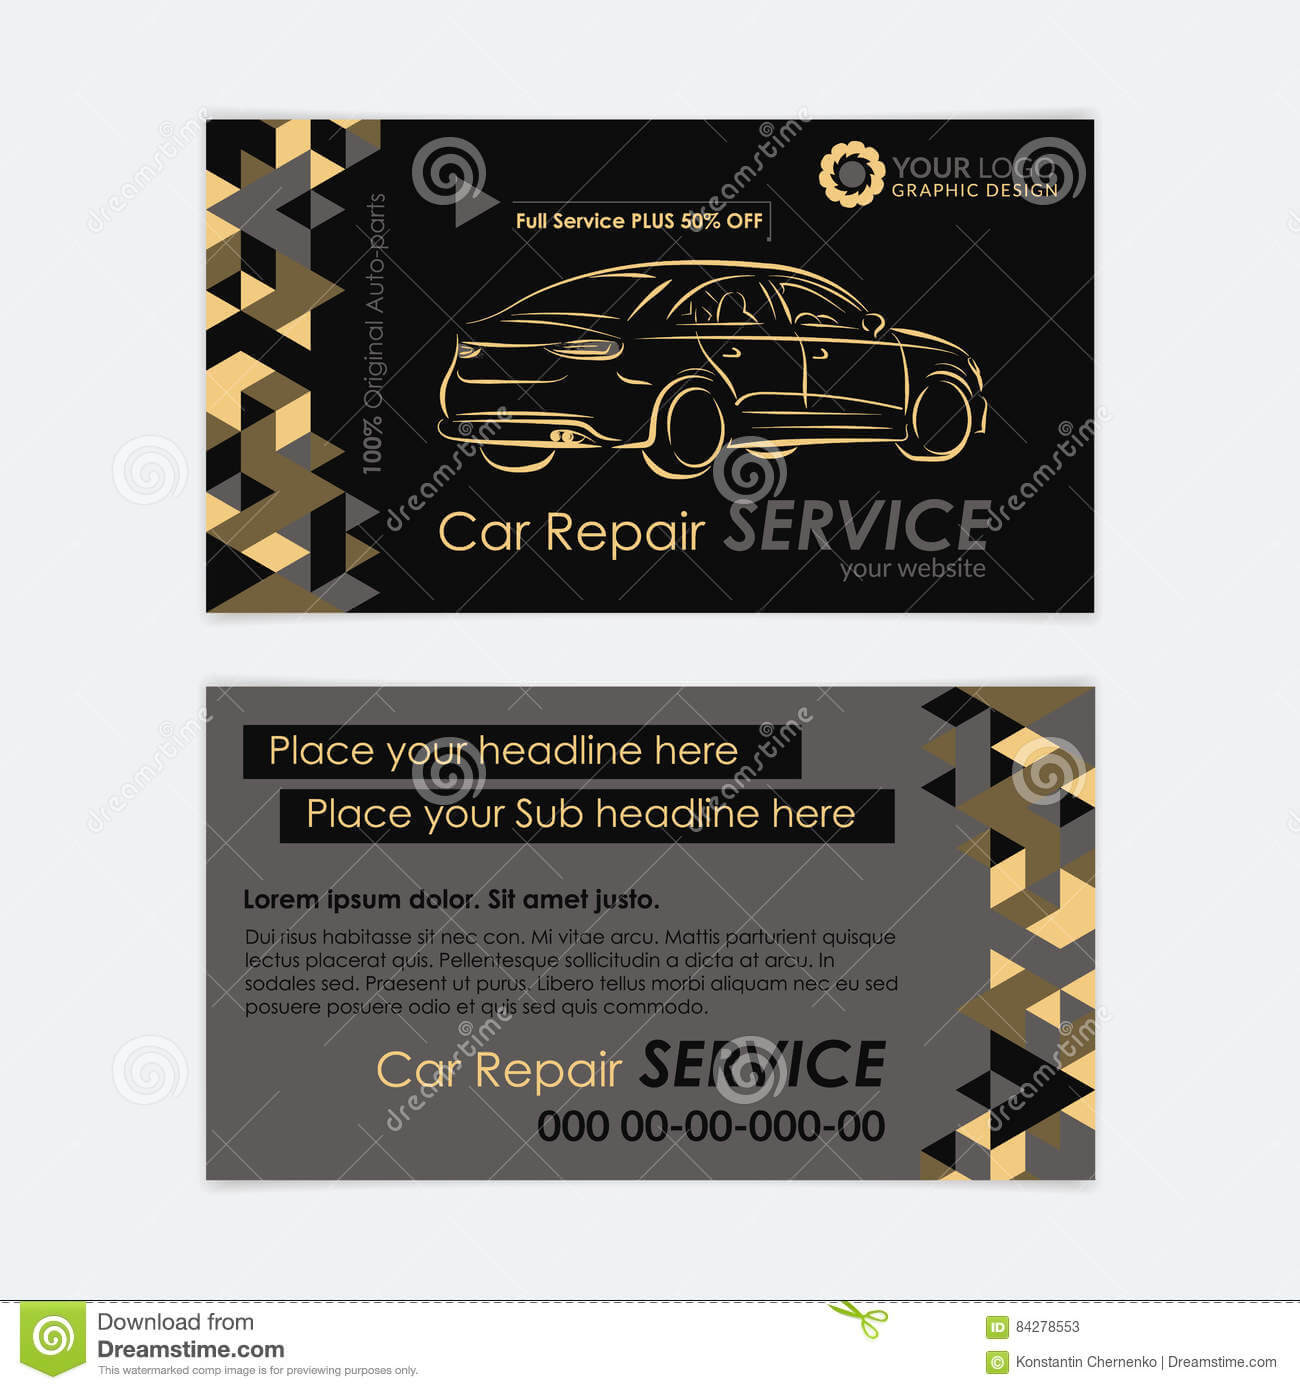 Automotive Service Business Card Template. Car Diagnostics In Transport Business Cards Templates Free